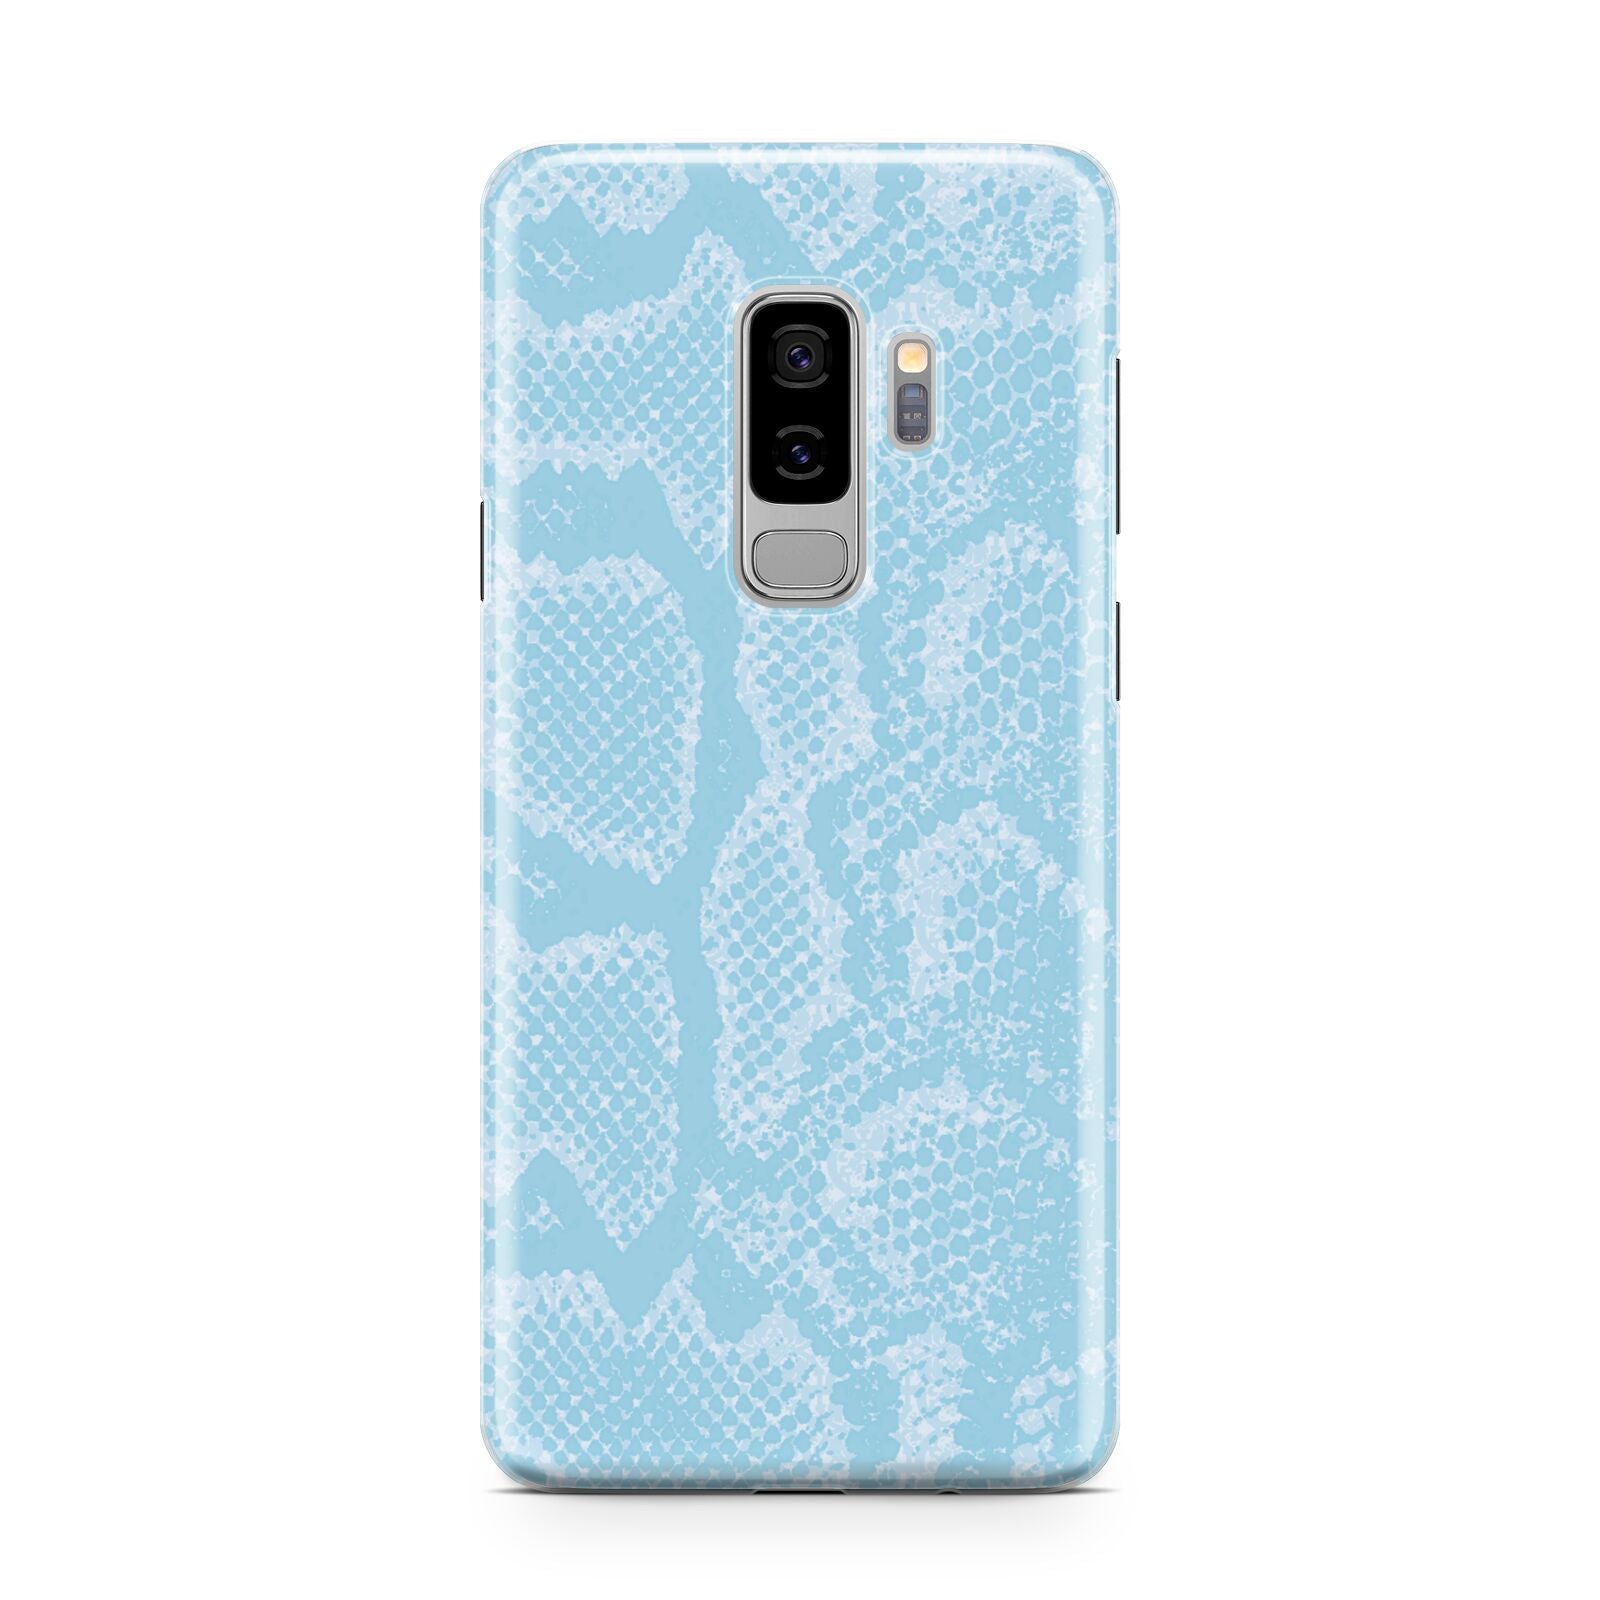 Blue Snakeskin Samsung Galaxy S9 Plus Case on Silver phone